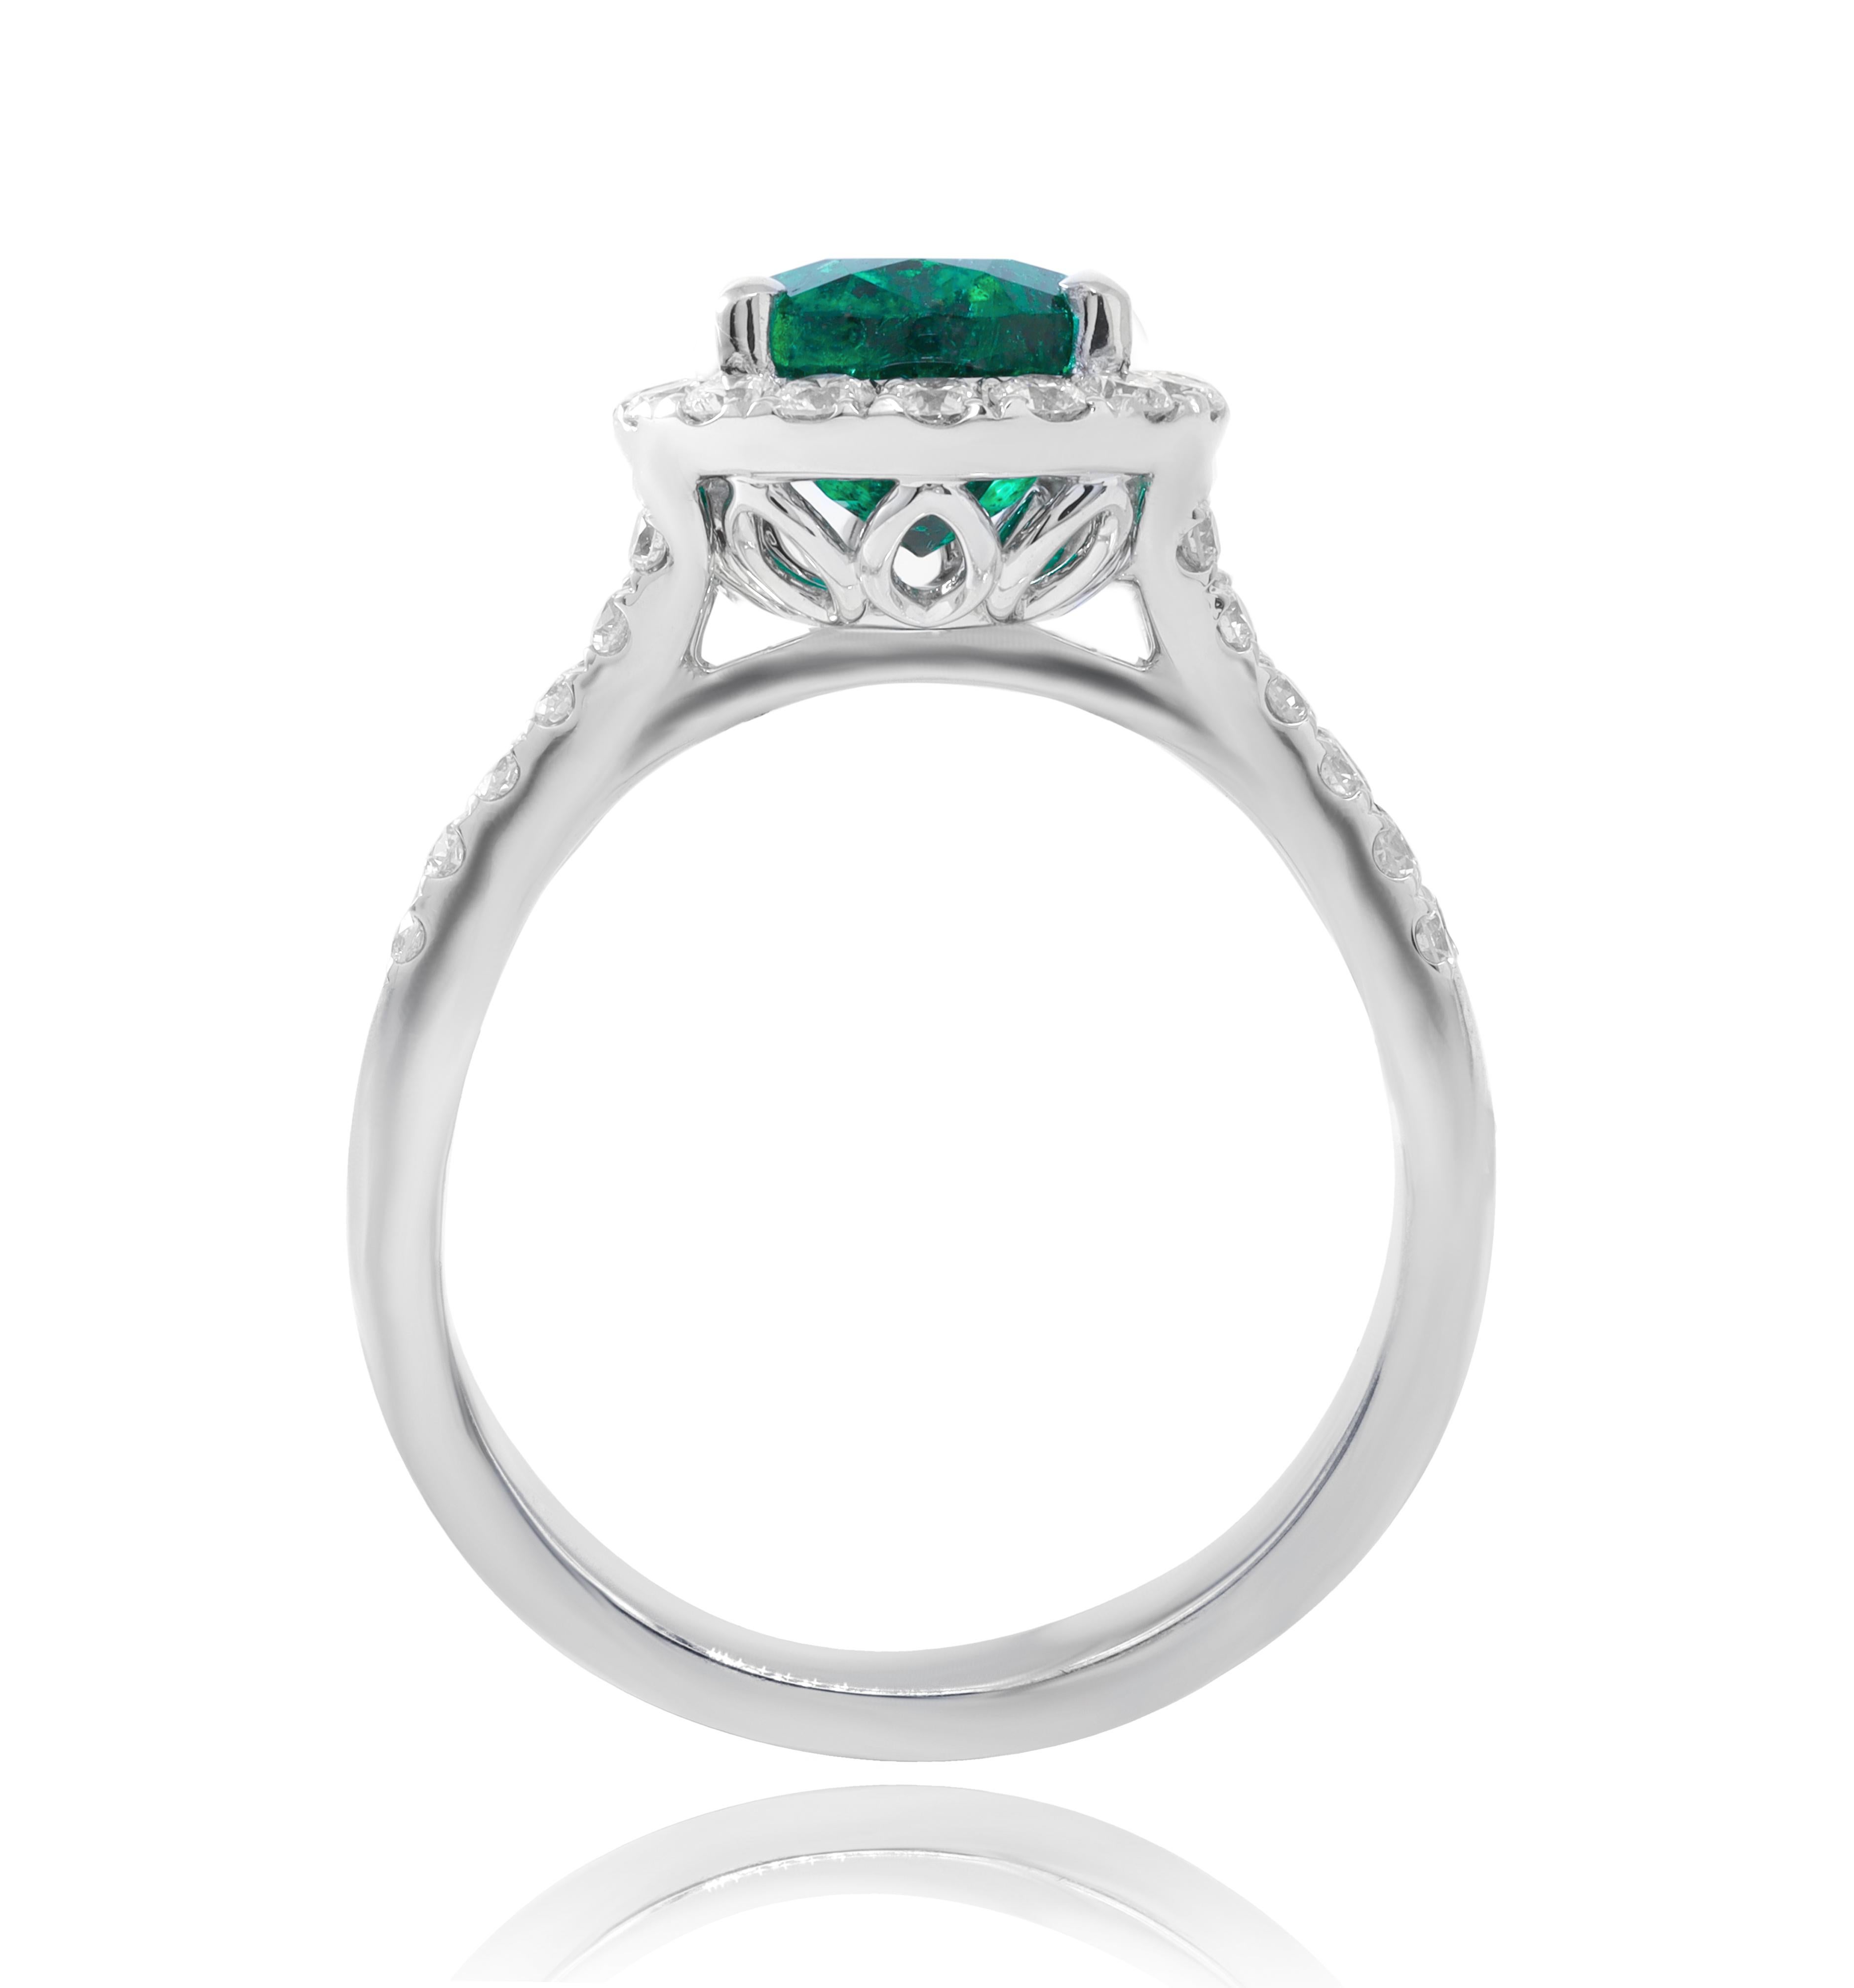 18k wg emerald ring, diamond 0.99ct. Emerald 2.97ct, 6.57gm, 43 st
